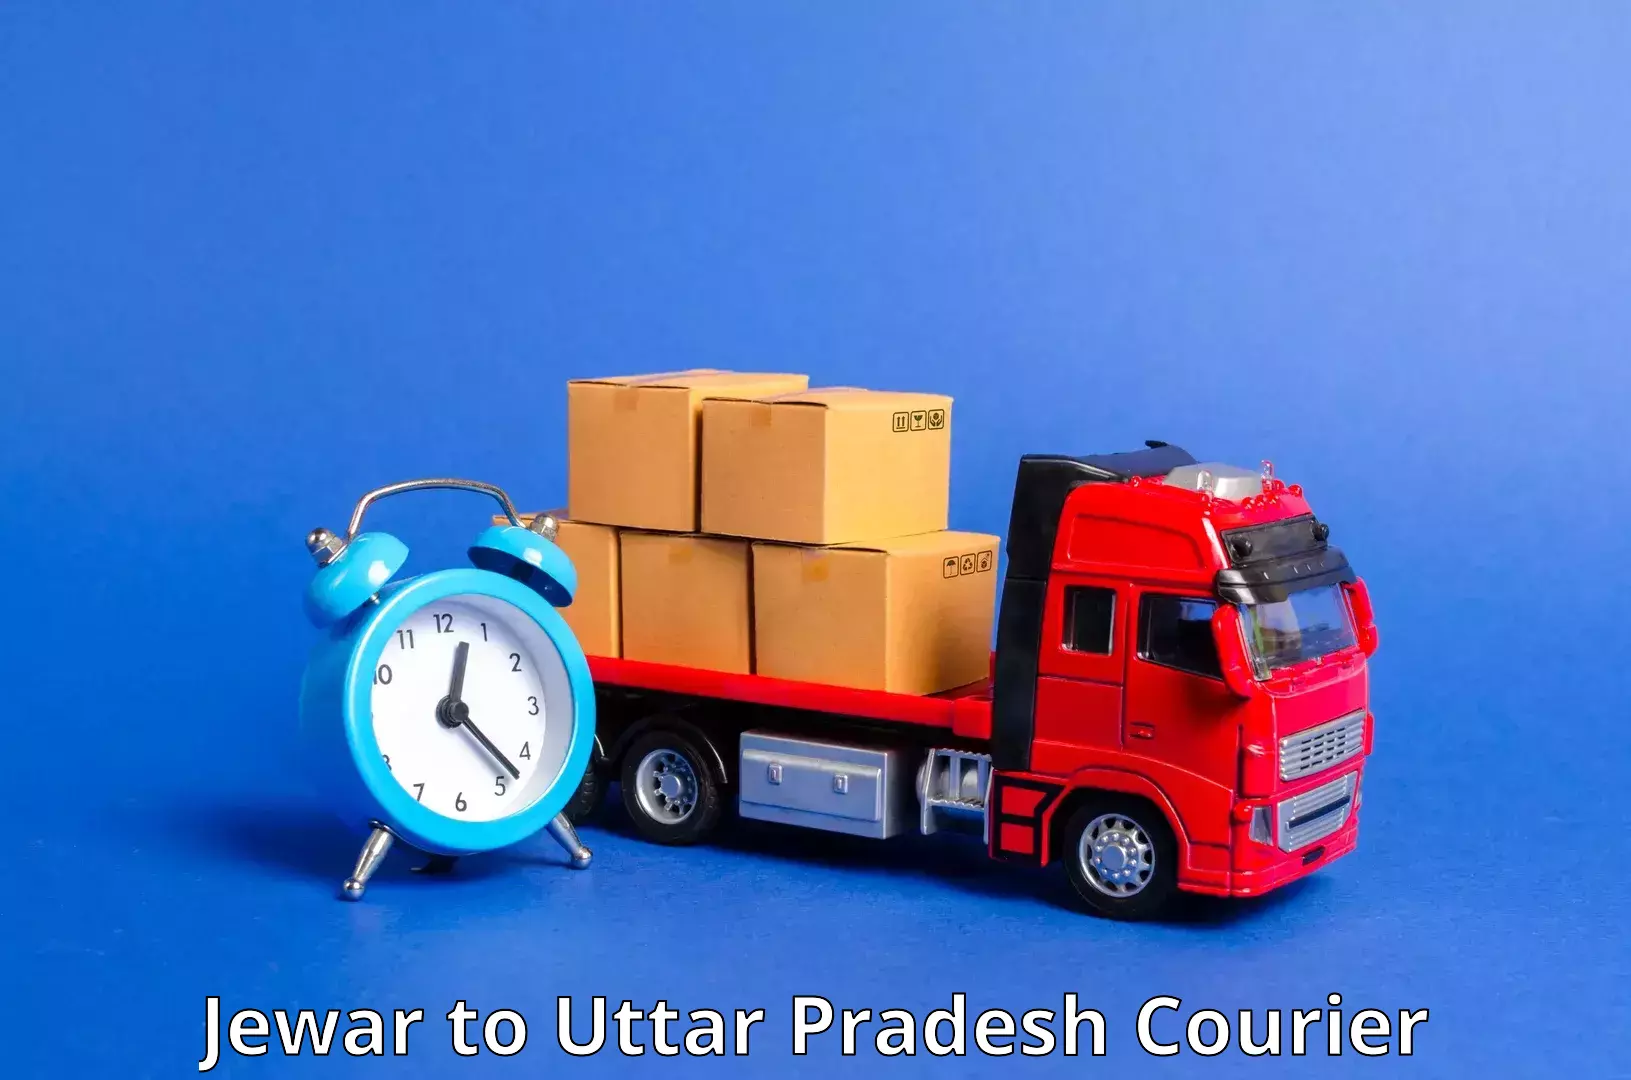 Punctual parcel services Jewar to Muzaffarnagar